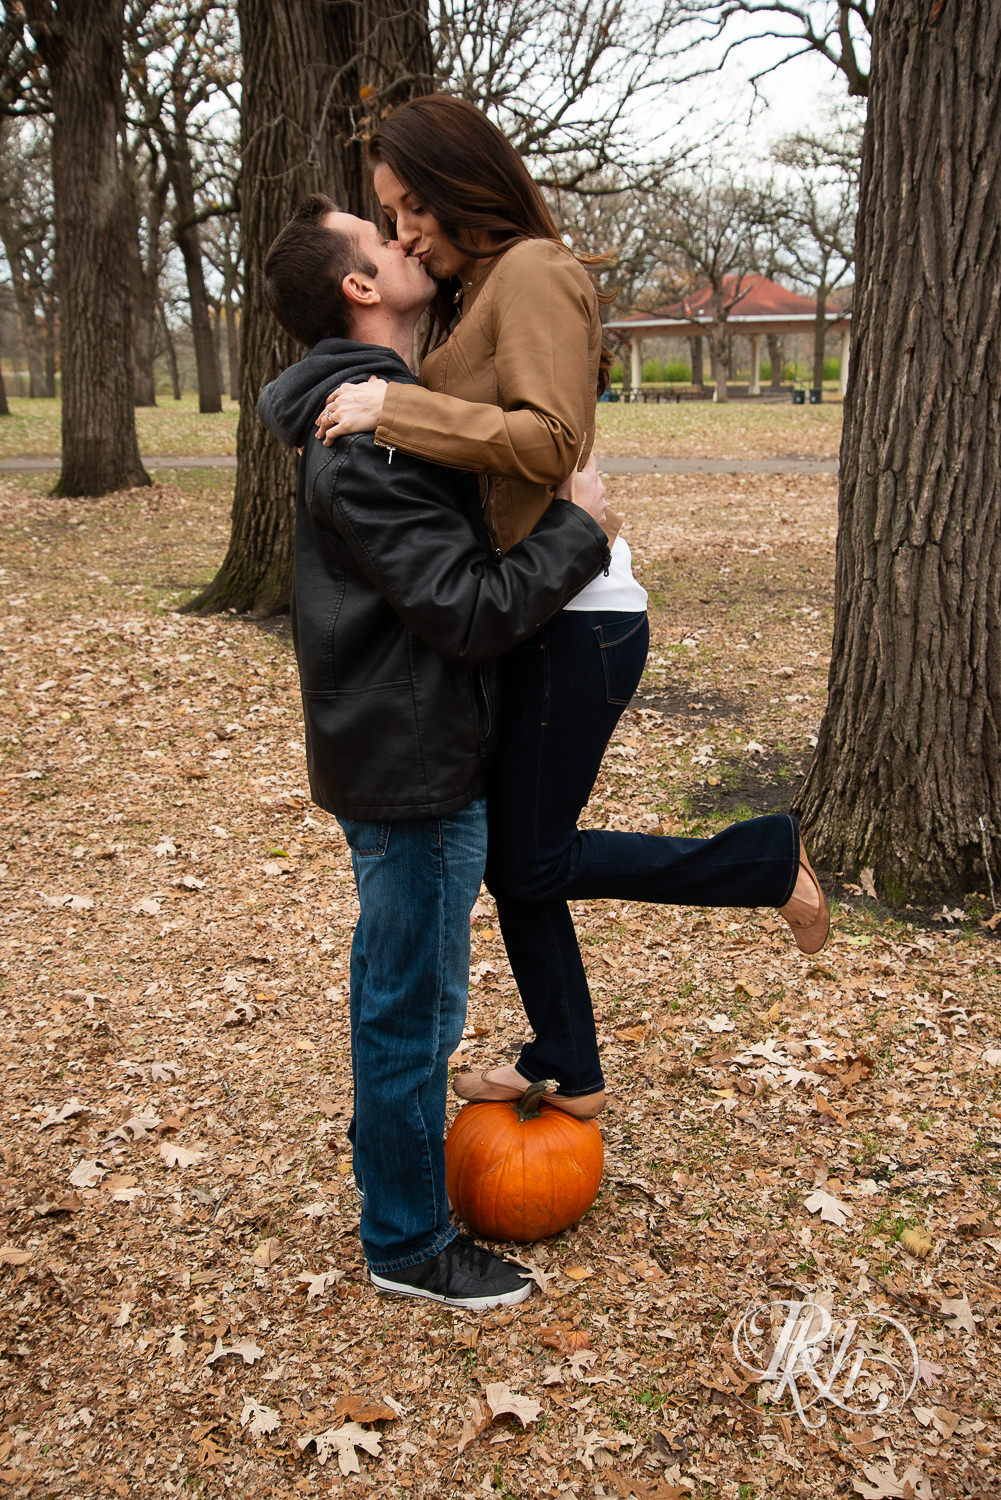 Man kissing a woman standing on a pumpkin during Minnehaha Falls engagement photos in Minneapolis, Minnesota.